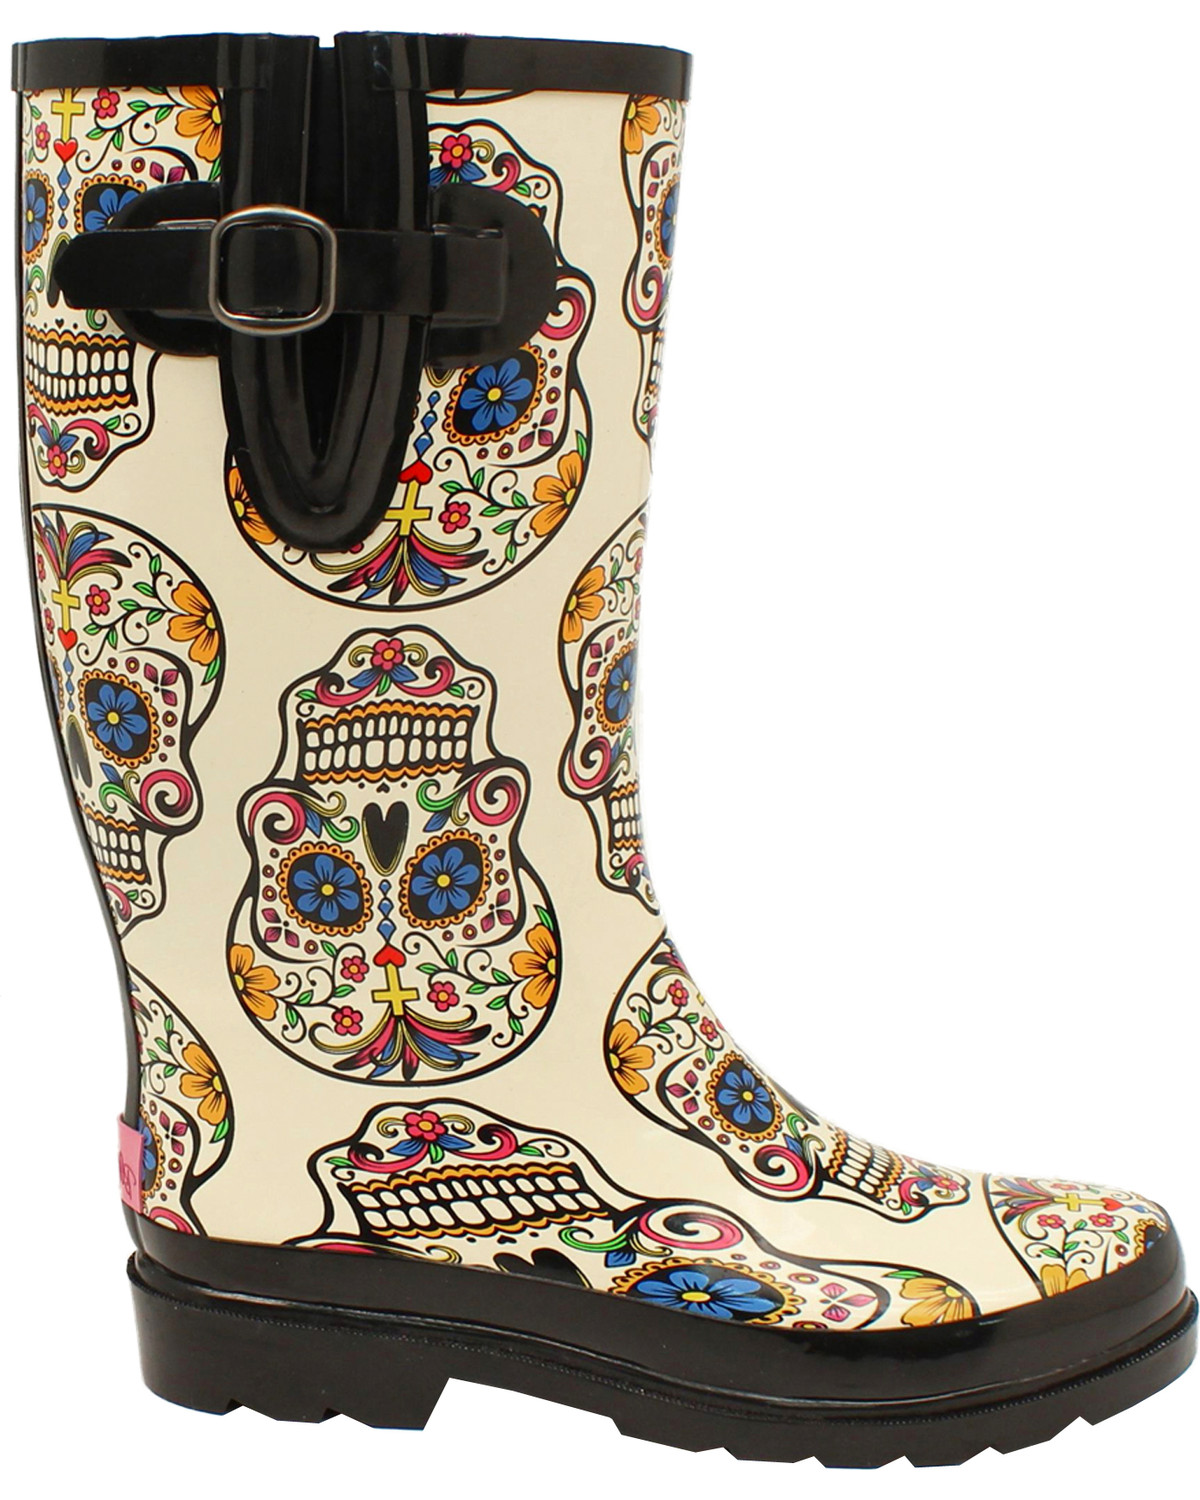 Muticolored Black Vine Sugar Skull Womens Vegan Leather Boots Custom Boots,Boho Chic boots,Spiritual Combat Boots Rain Boots,Hippie